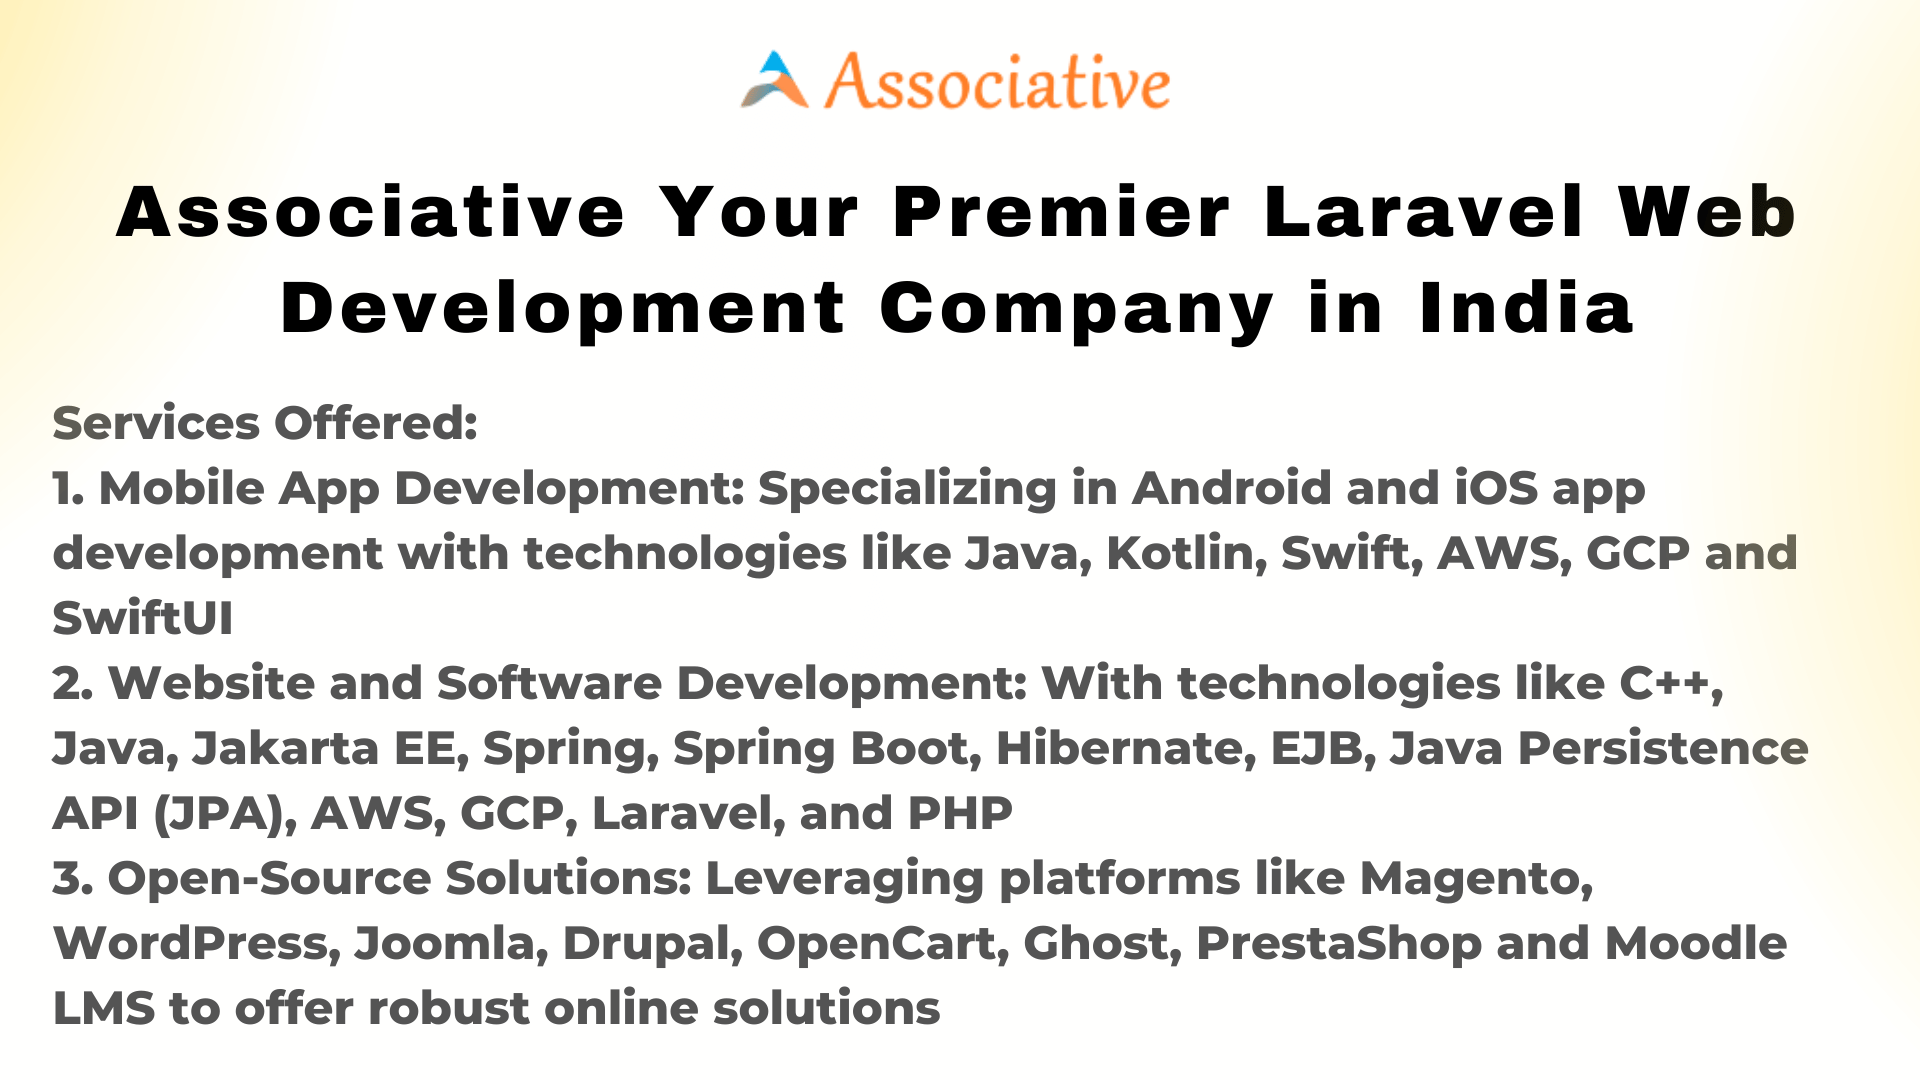 Associative Your Premier Laravel Web Development Company in India